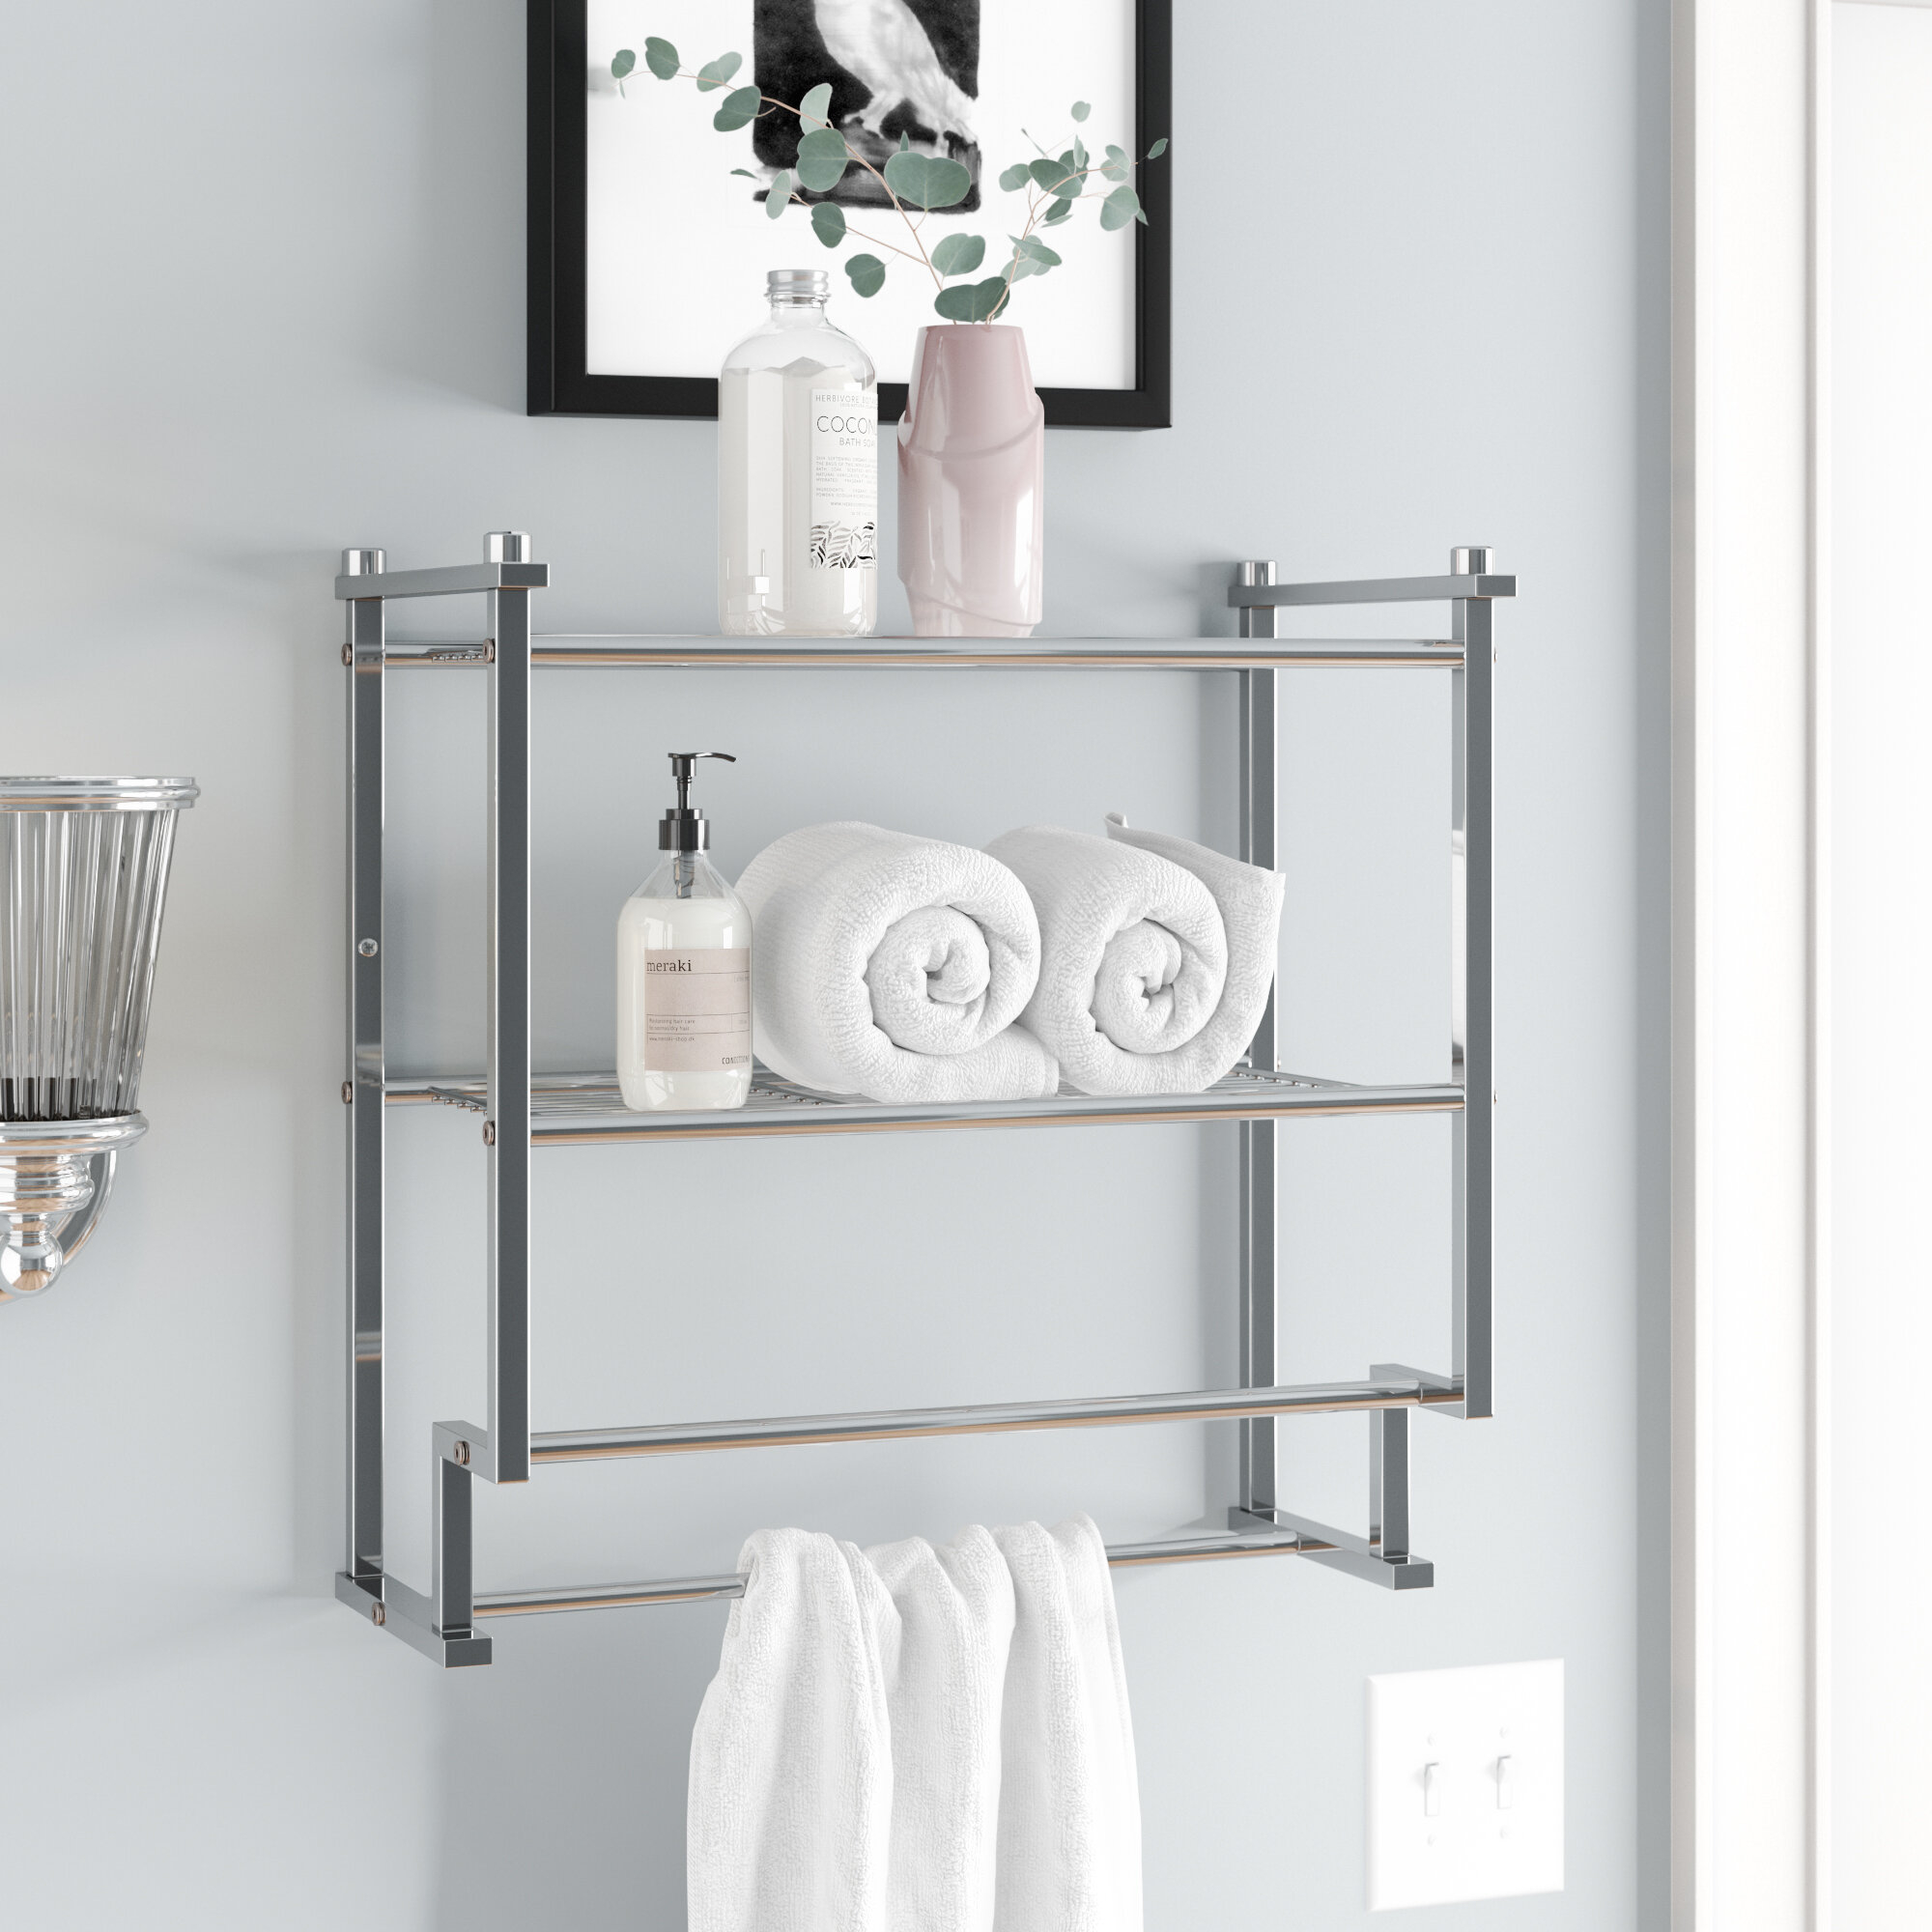 Bathroom Shelf With Towel Bar Visualhunt, Wood Bathroom Shelves With Towel Bar